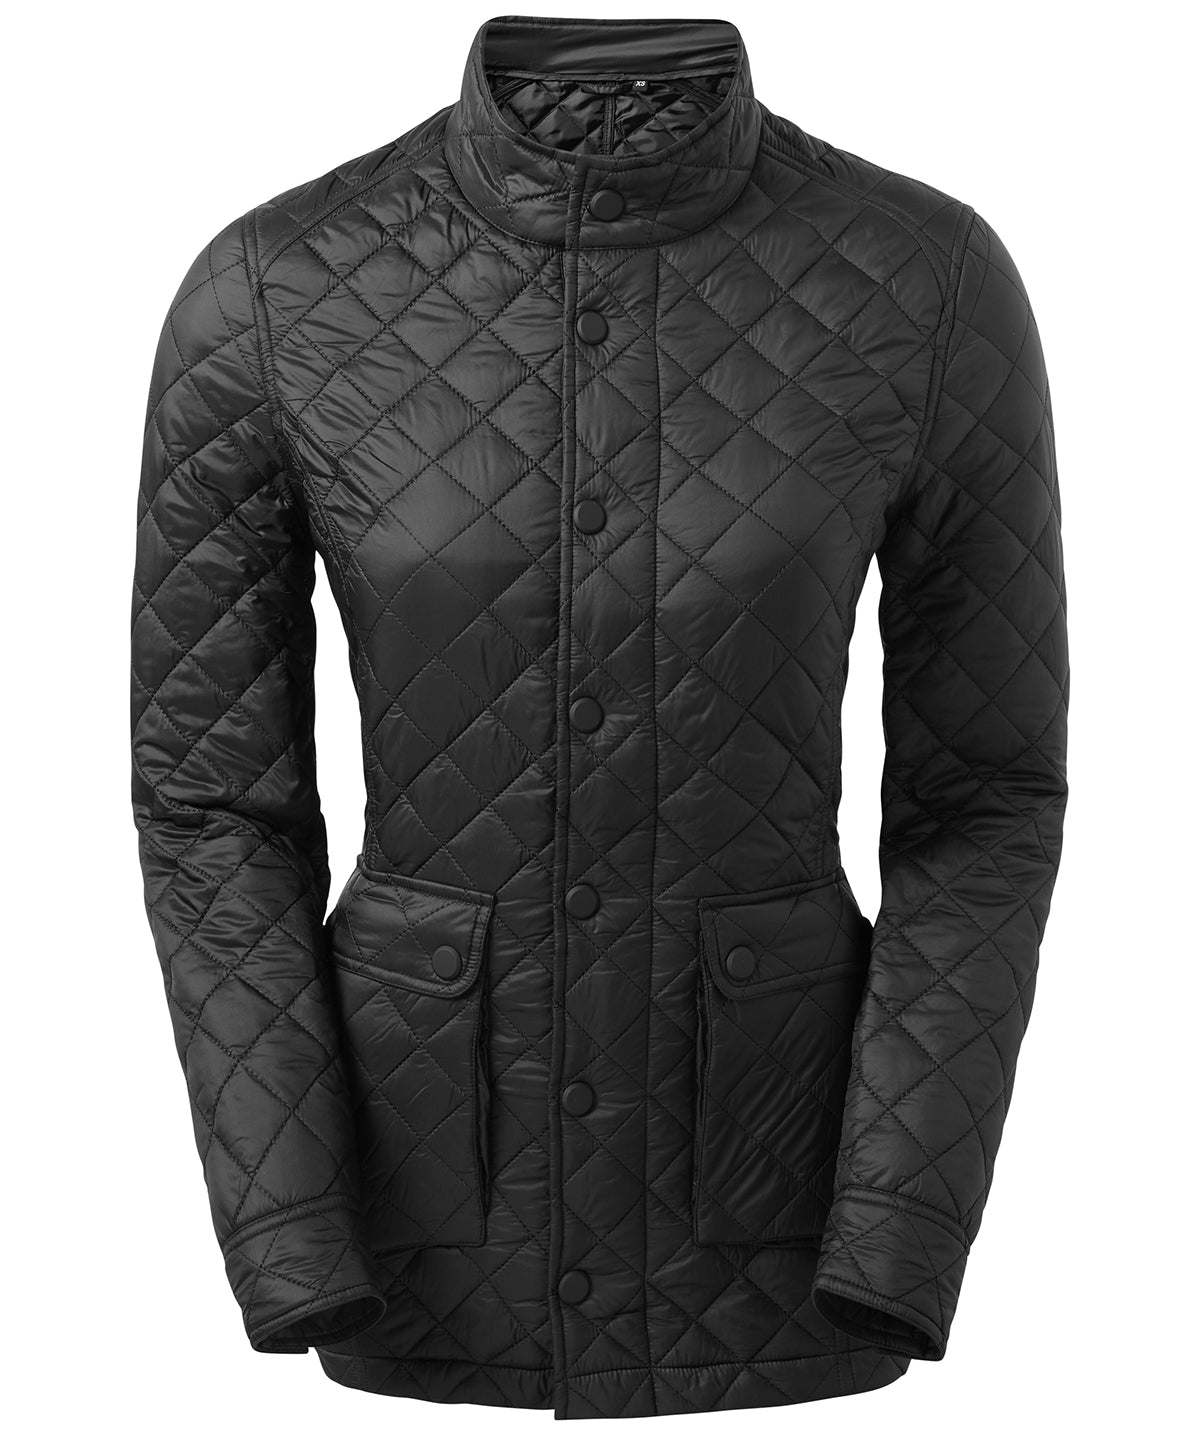 Personalised Jackets - Black 2786 Women's Quartic quilt jacket